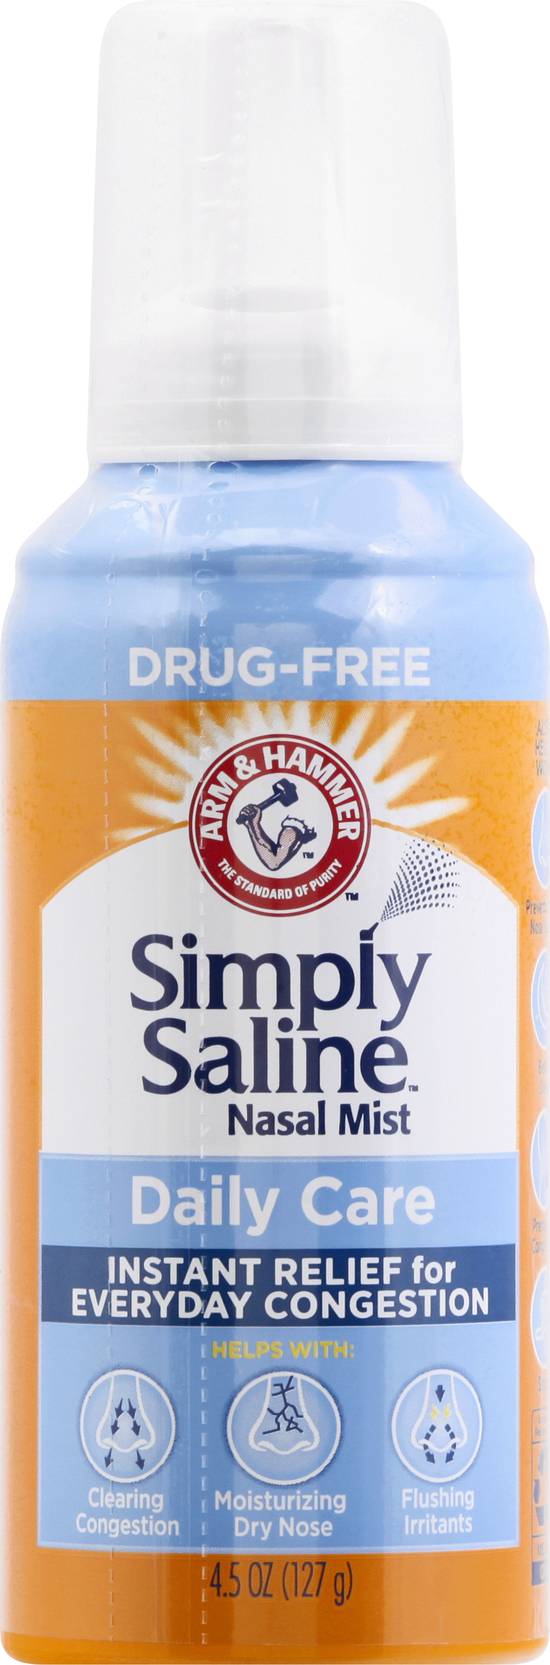 Simply Saline Adult Nasal Mist Daily Care (4.5 oz)